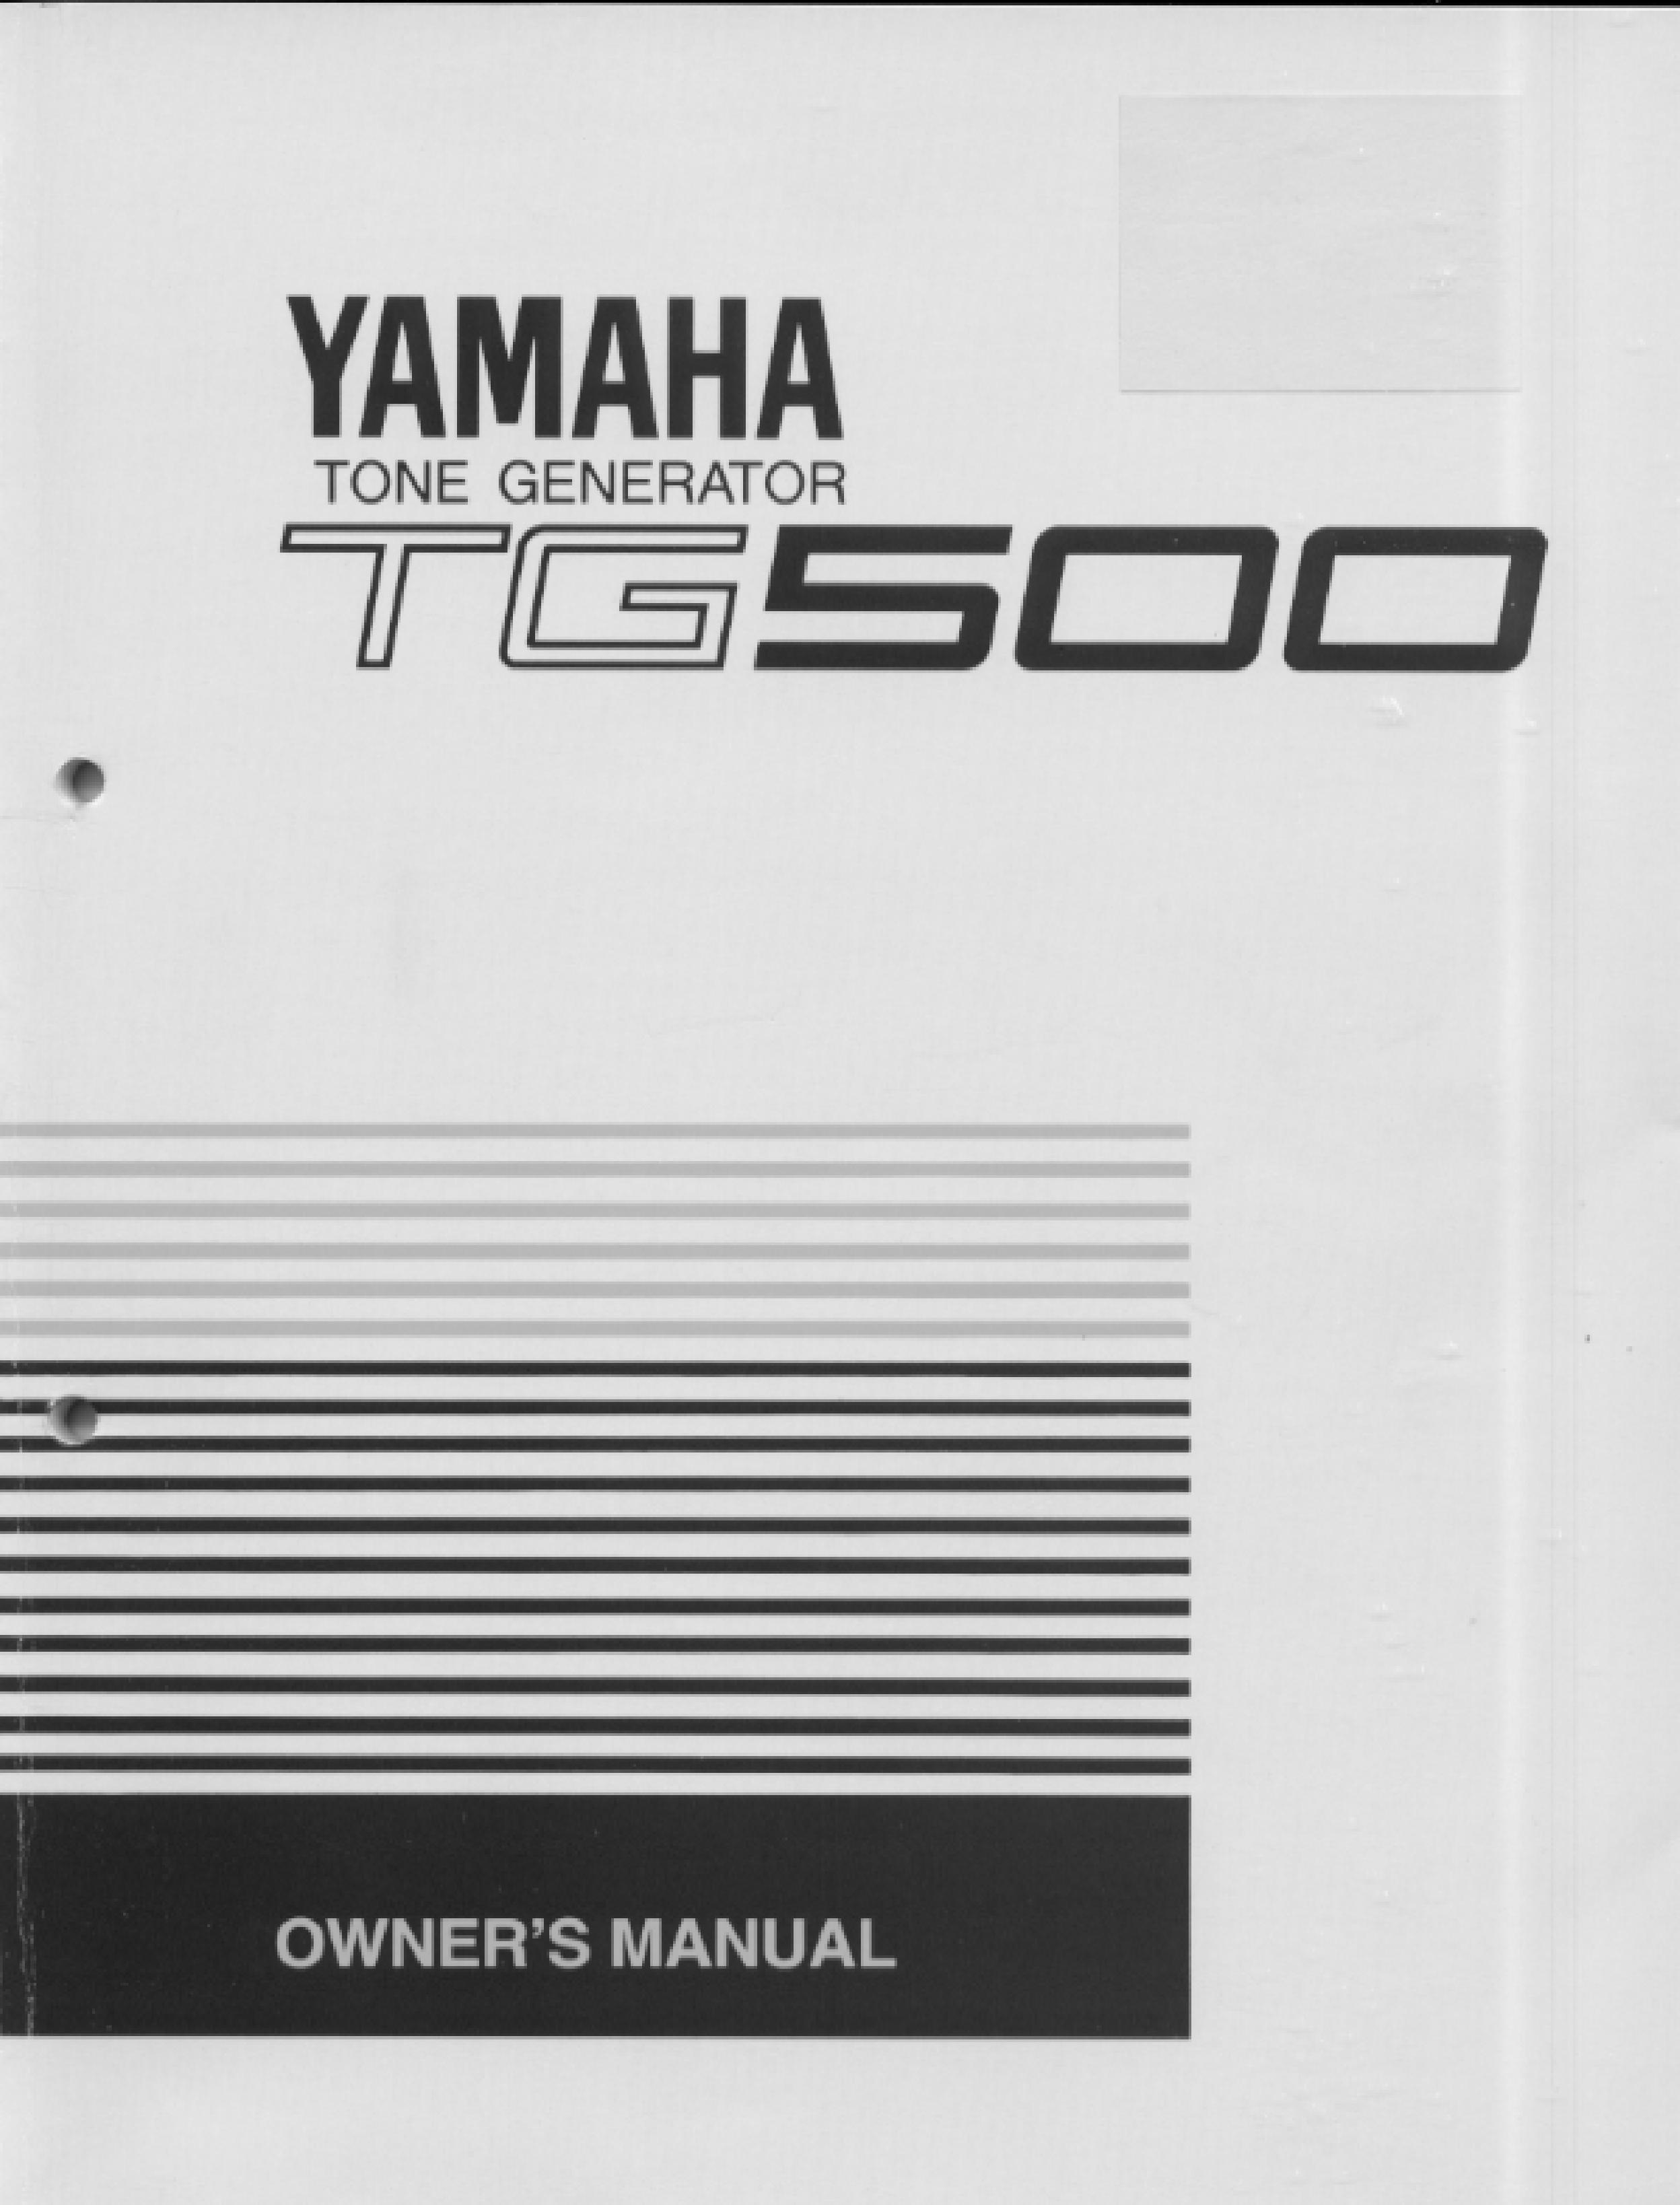 Yamaha TG500 Portable Generator User Manual